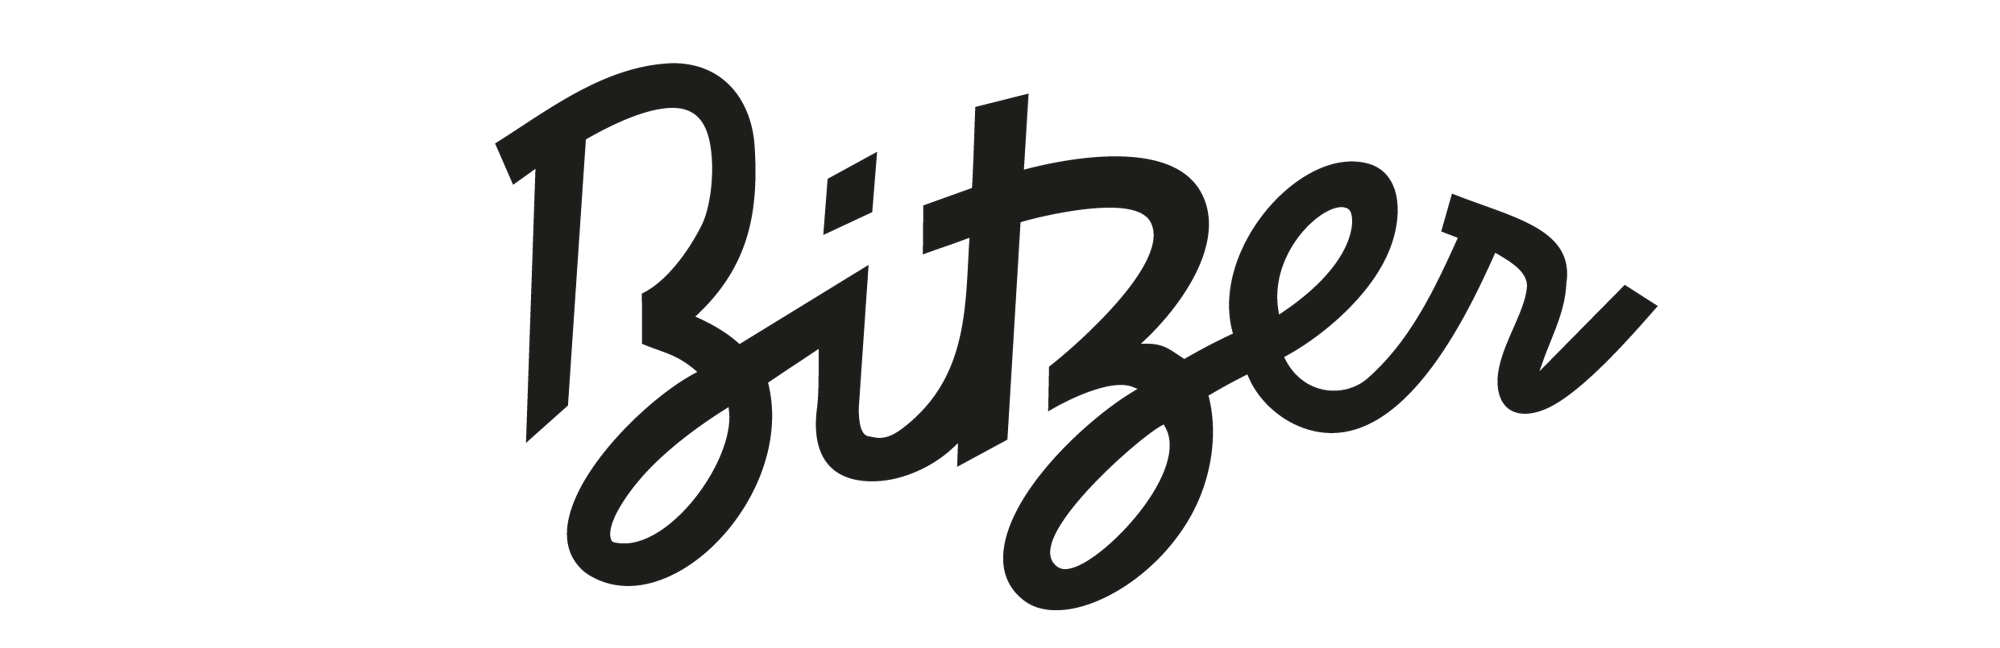 Bitzer_Logo_schwarz